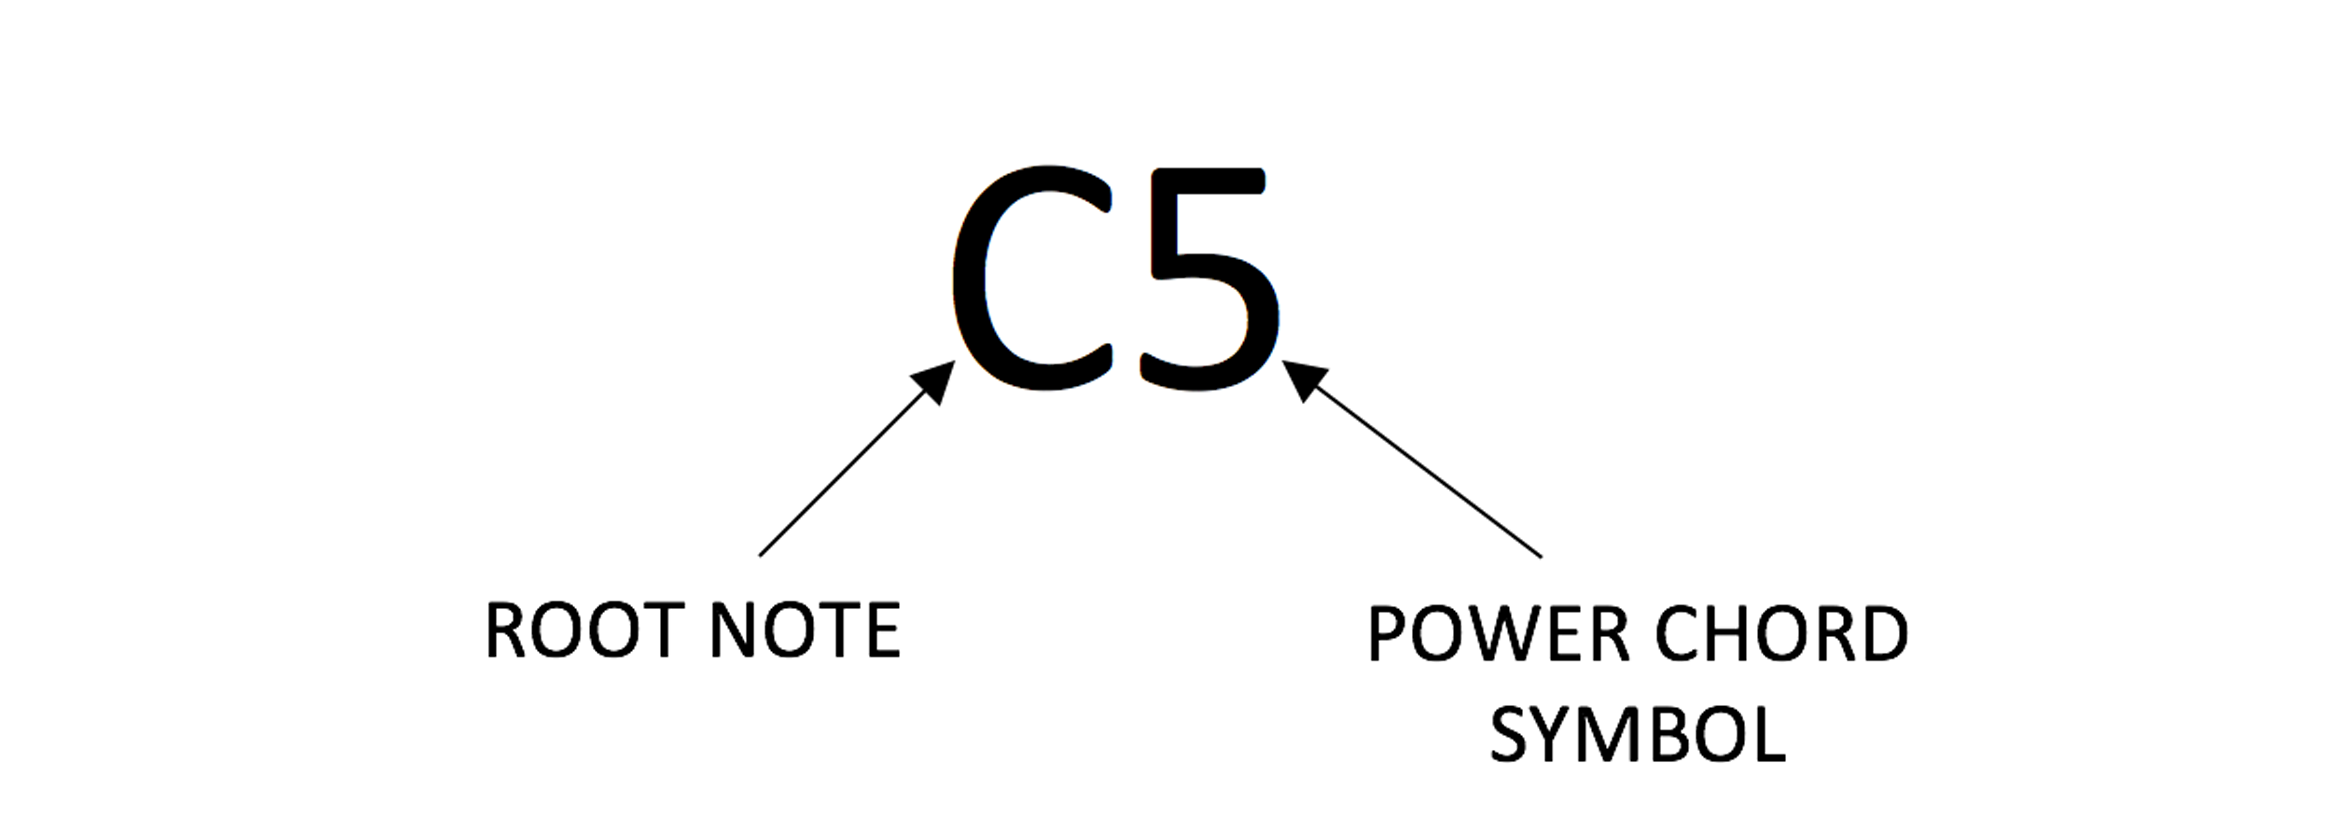 powerchord-symbol